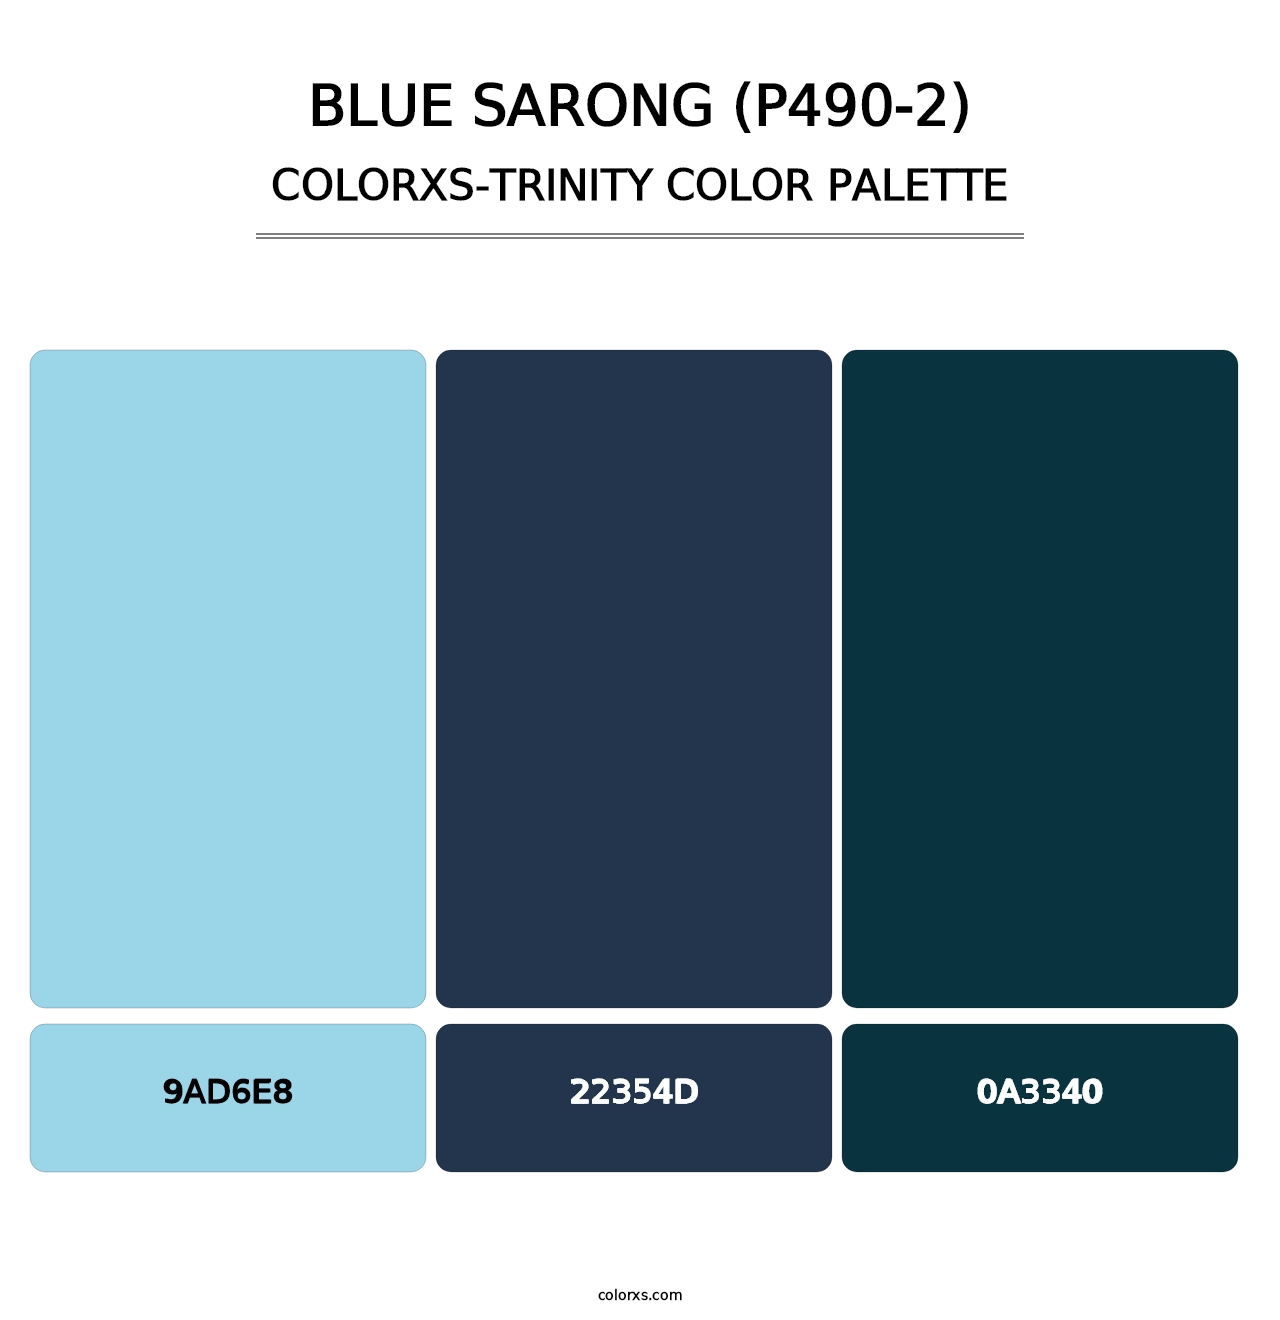 Blue Sarong (P490-2) - Colorxs Trinity Palette